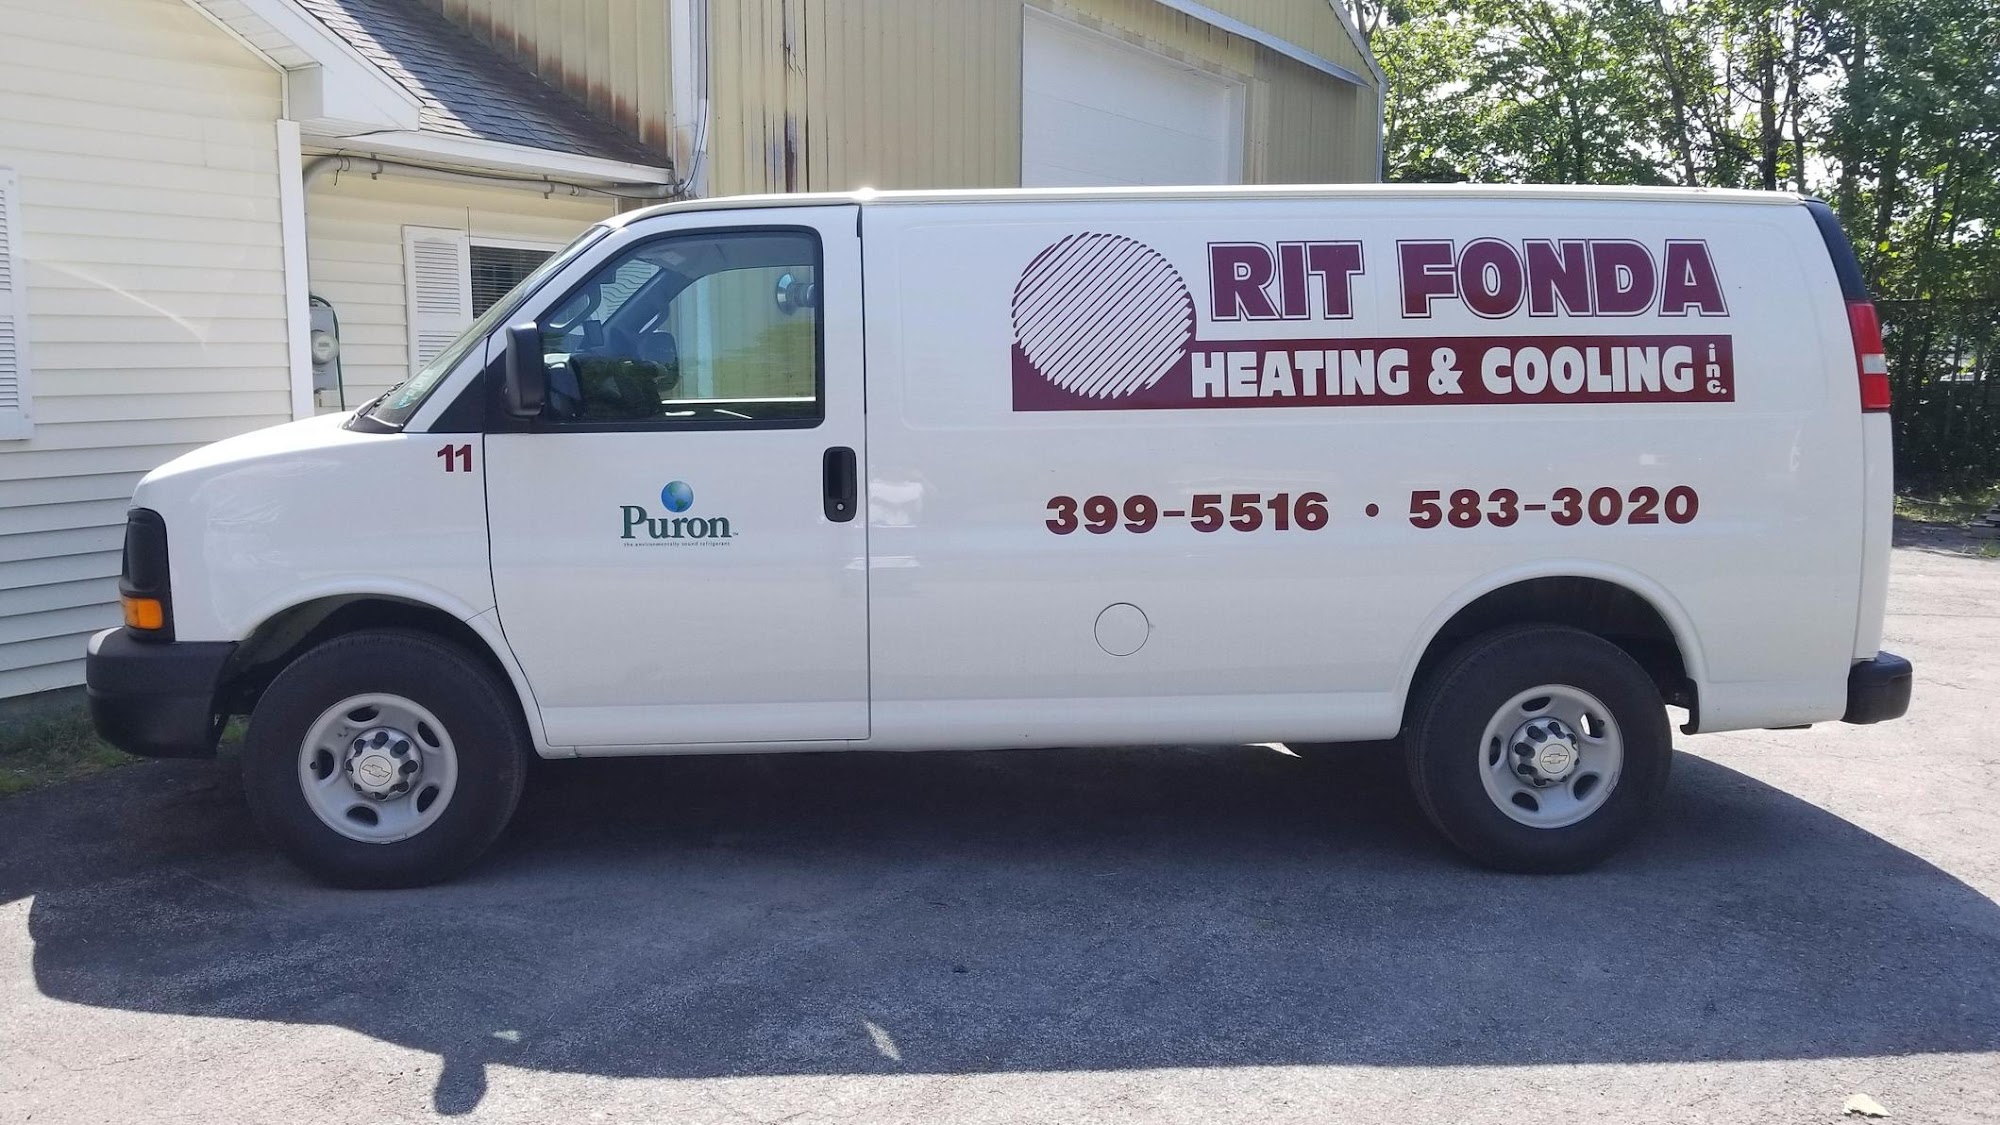 Rit Fonda Heating & Cooling